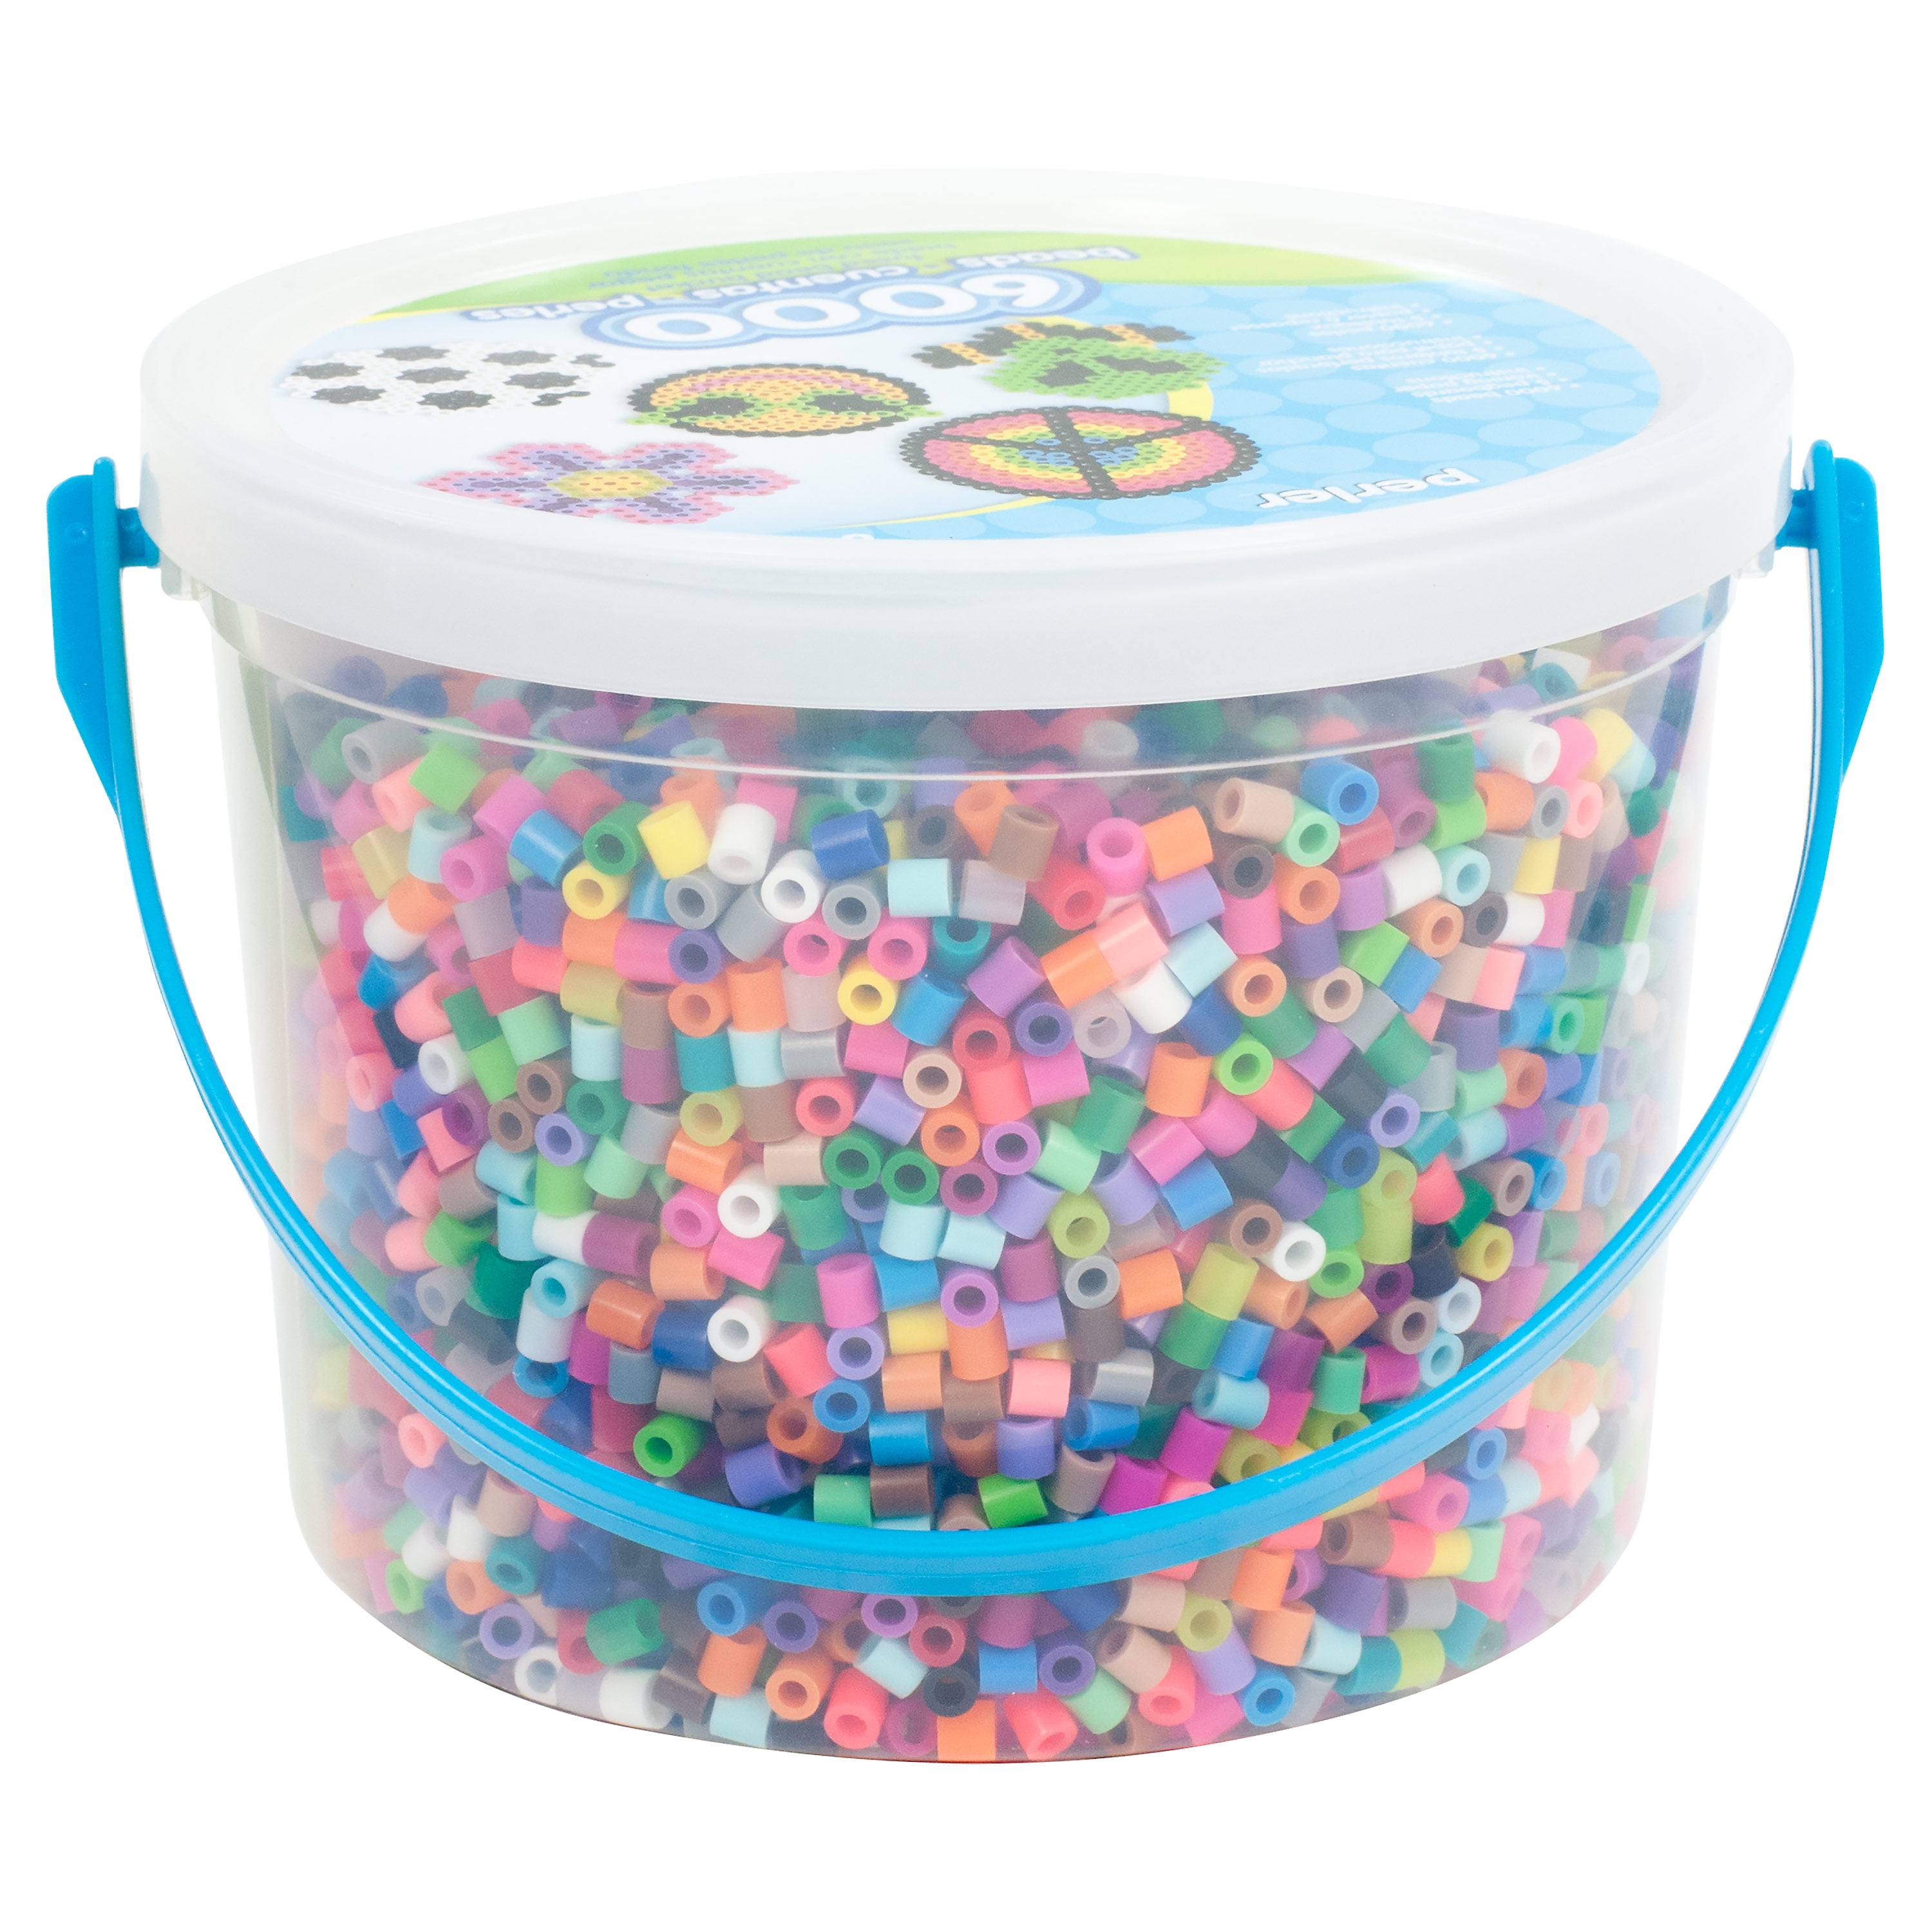 Perler Multi Mix Assorted Fuse Bead Bucket 6006 pcs Perler Beads 42766